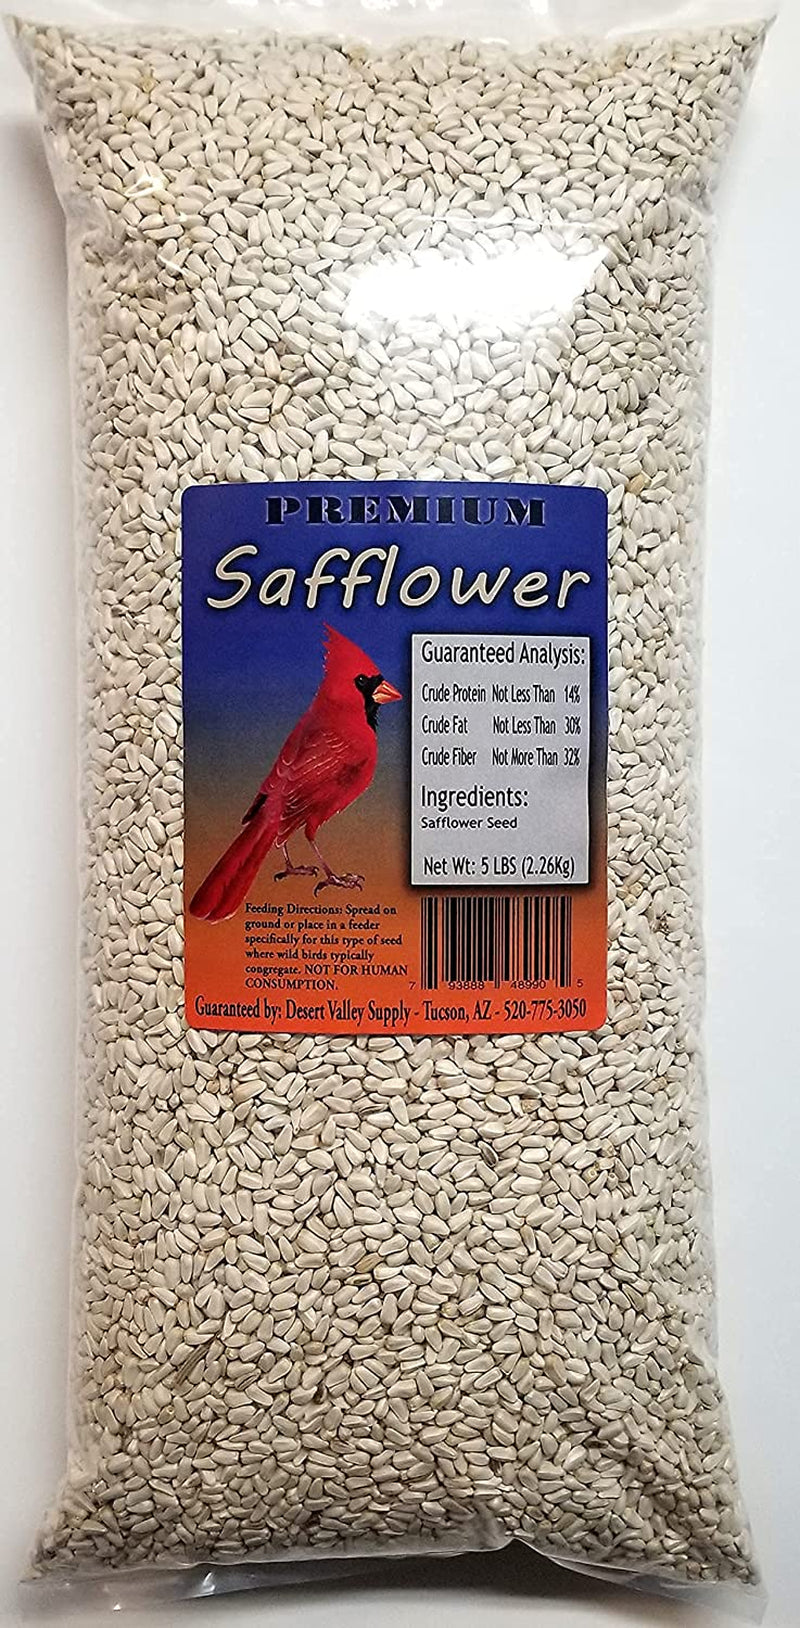 Desert Valley Premium Safflower Seeds - Wild Bird Food, Cardinals, Jays, Doves & More (5-Pounds)